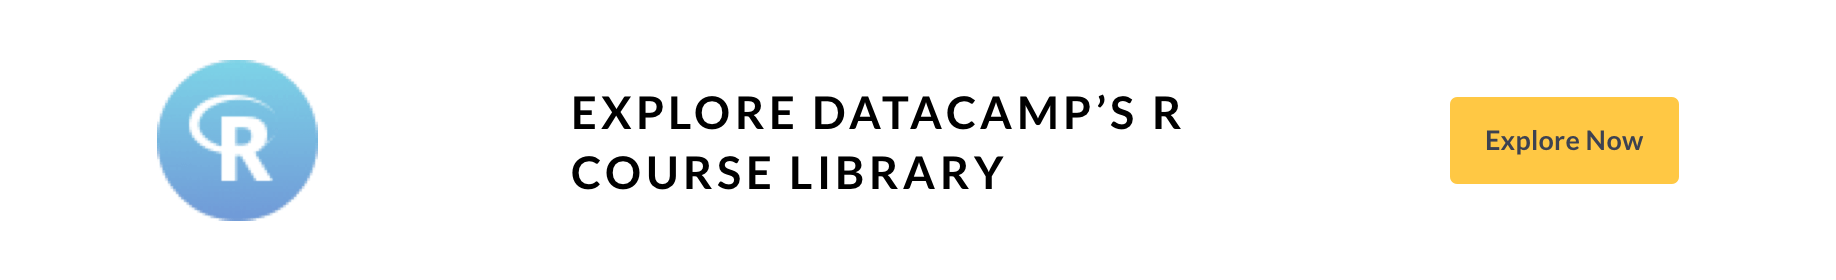 explore datacamp's r course library banner